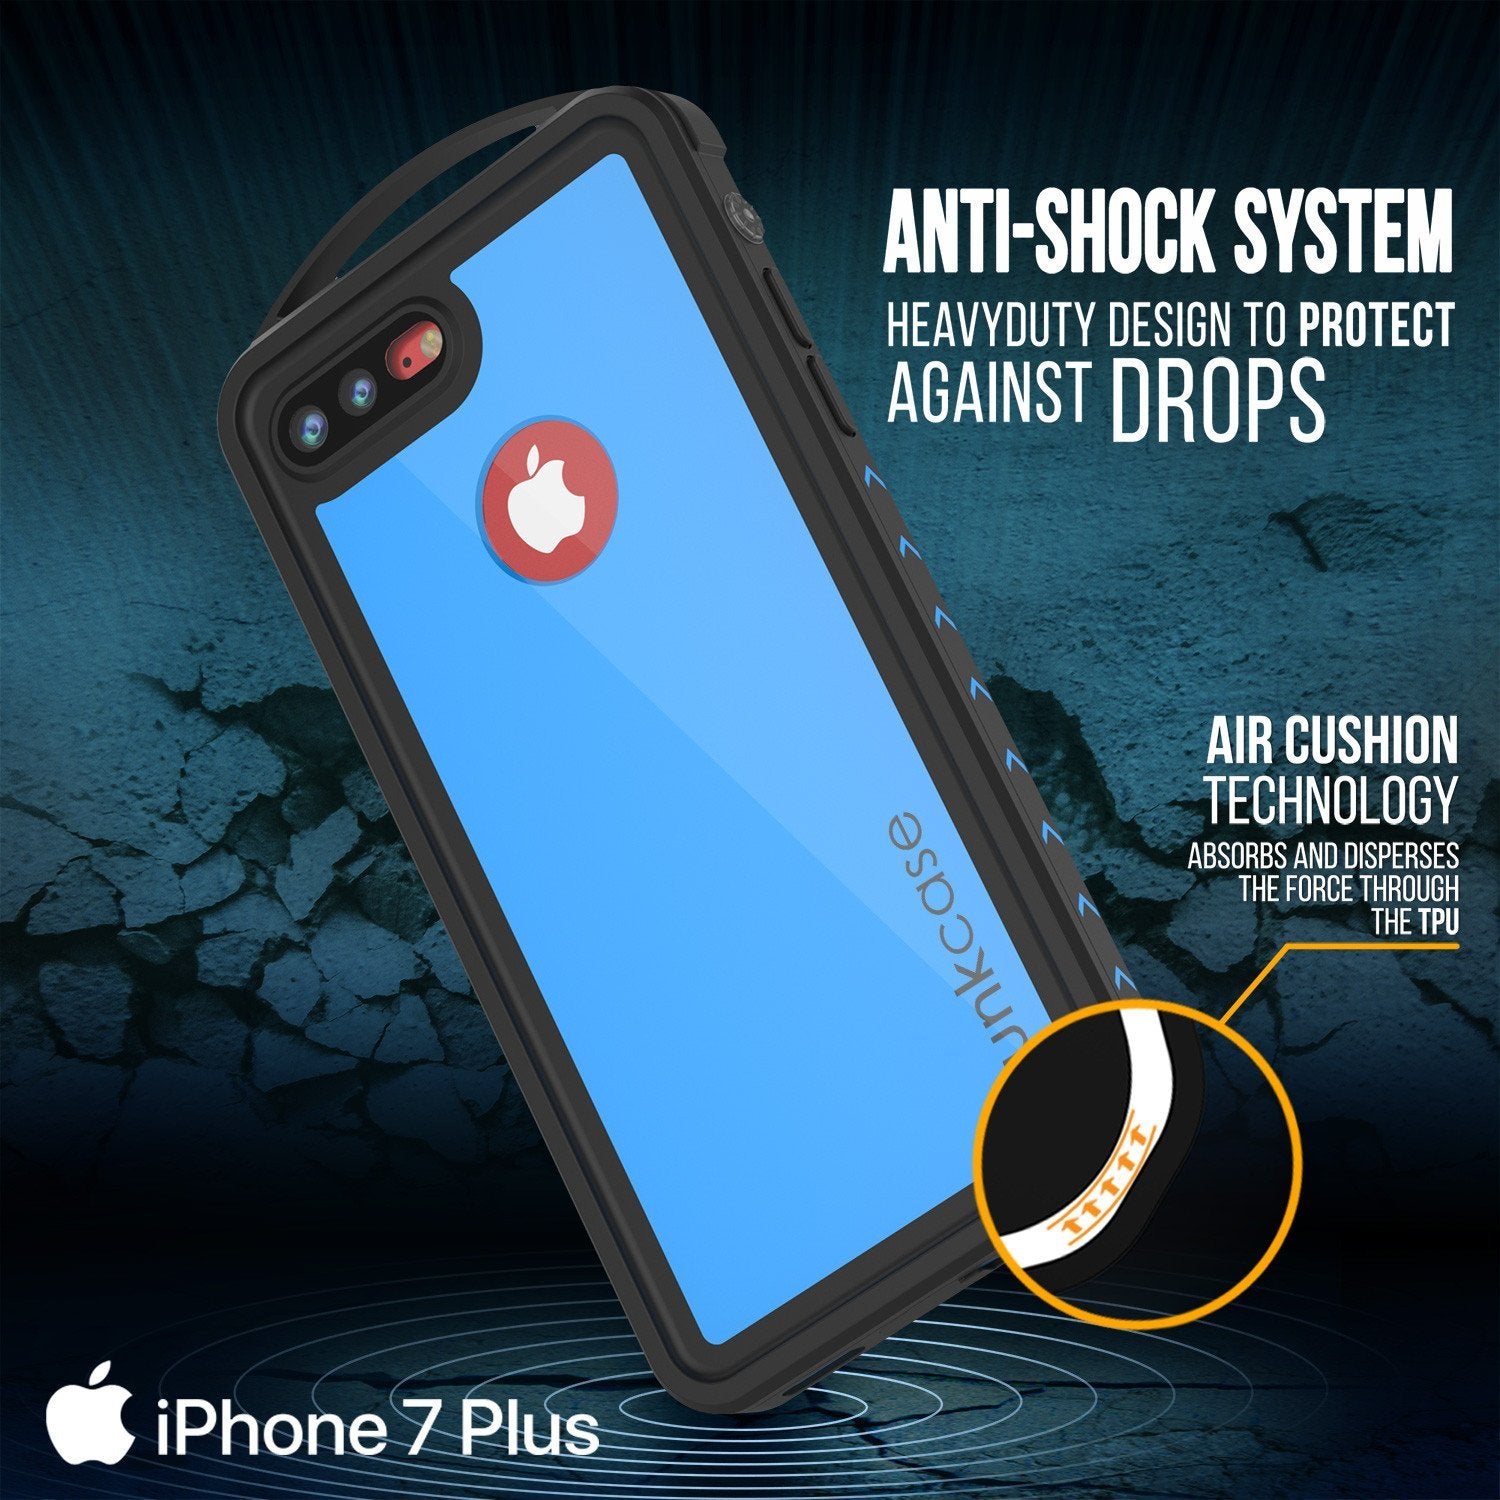 iPhone 8+ Plus Waterproof Case, Punkcase ALPINE Series, Light Blue | Heavy Duty Armor Cover